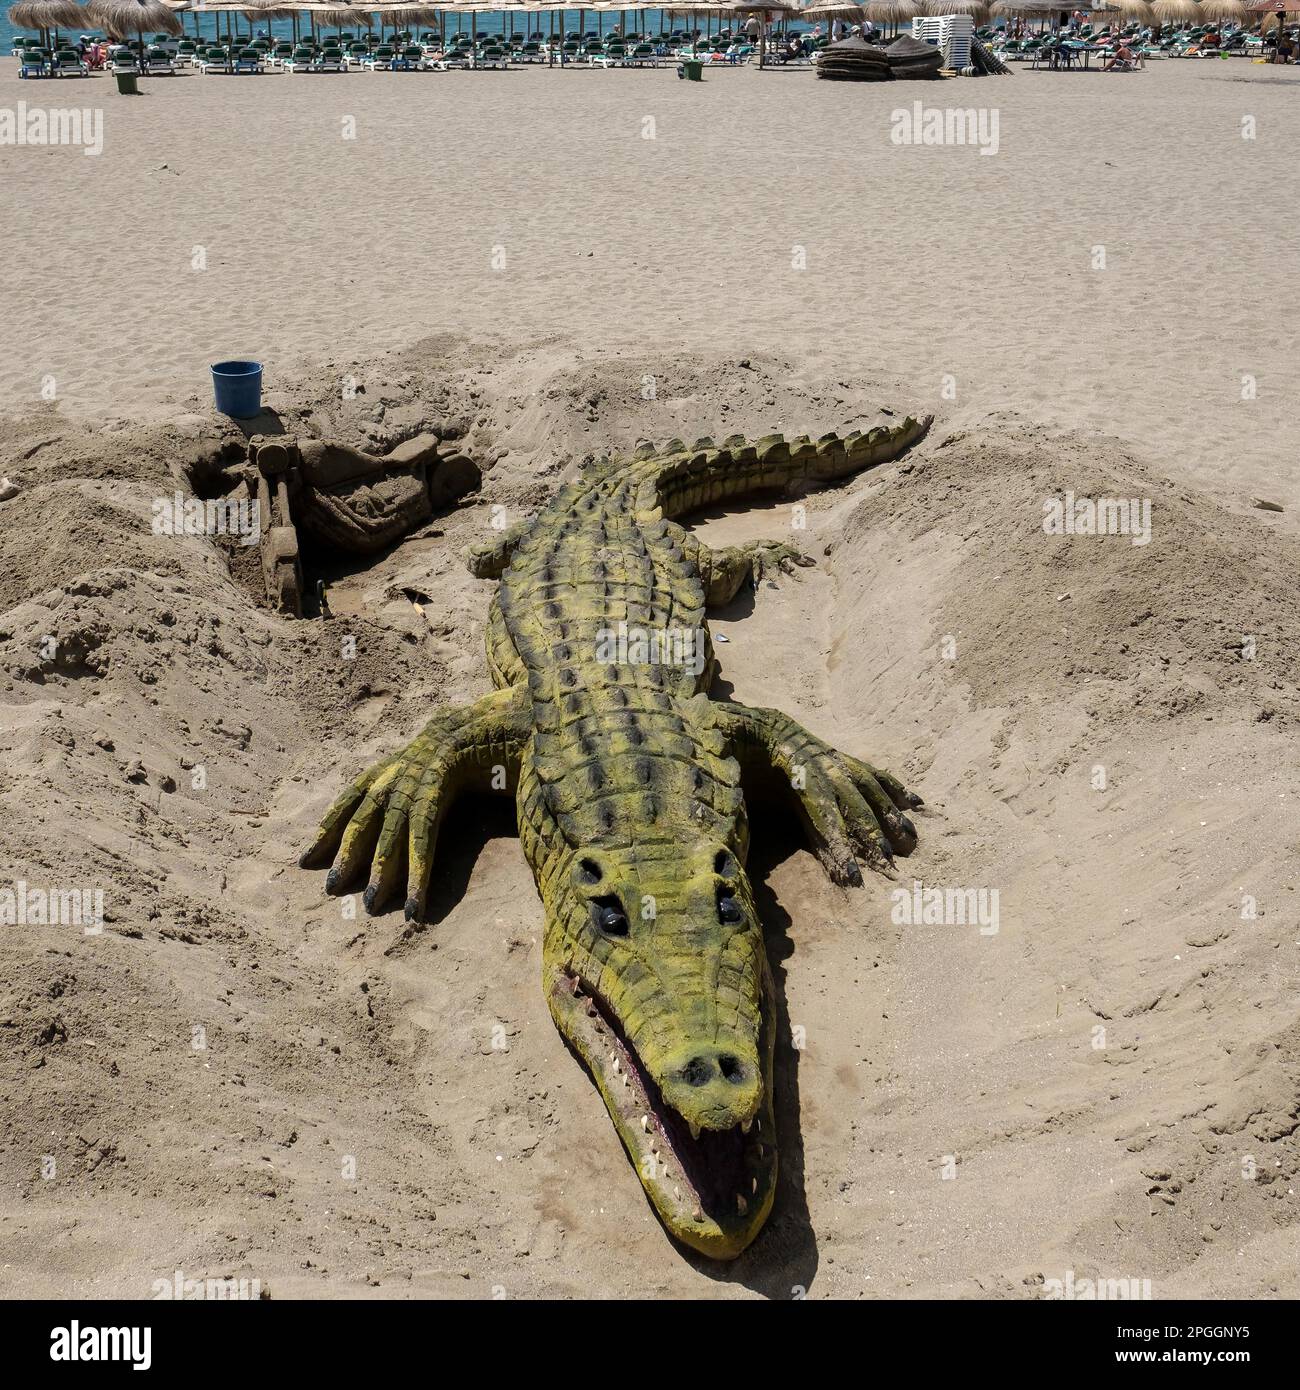 Crocodile Sand Sculpture on the Beach in Marbella Stock Photo